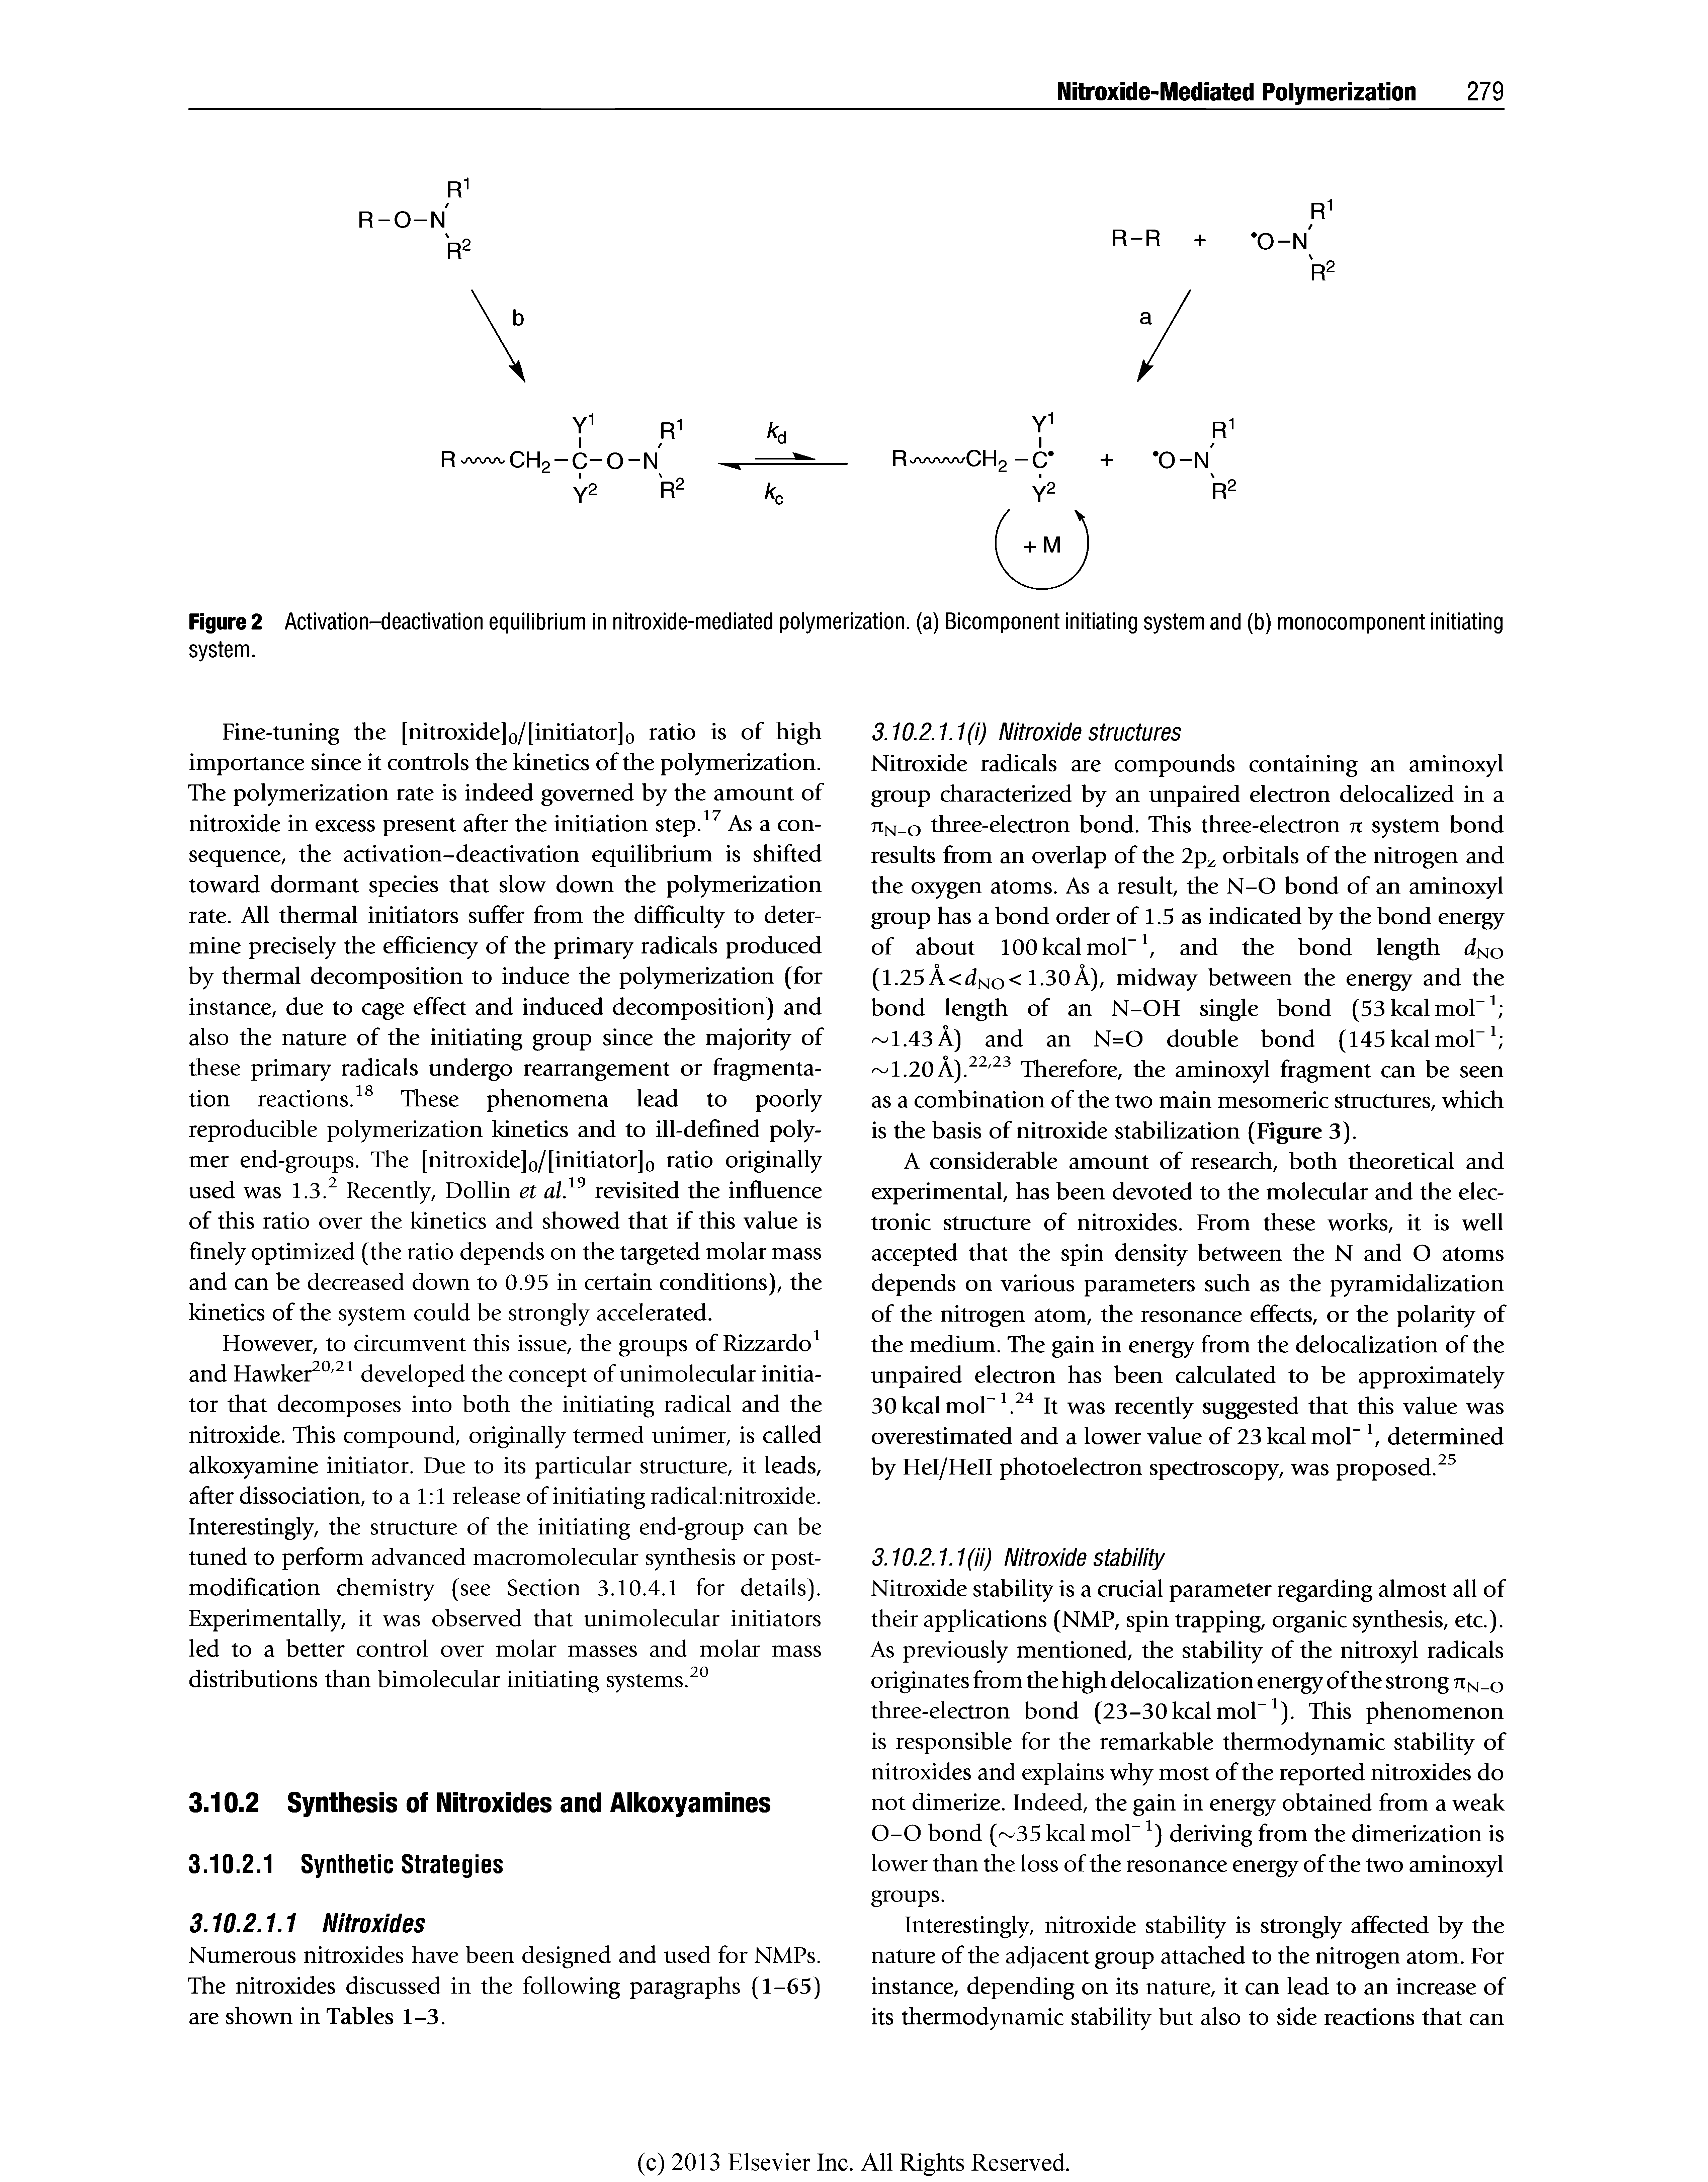 Figure 2 Activation-deactivation equilibrium in nitroxide-mediated polymerization, (a) Bicomponent initiating system and (b) monocomponent initiating system.